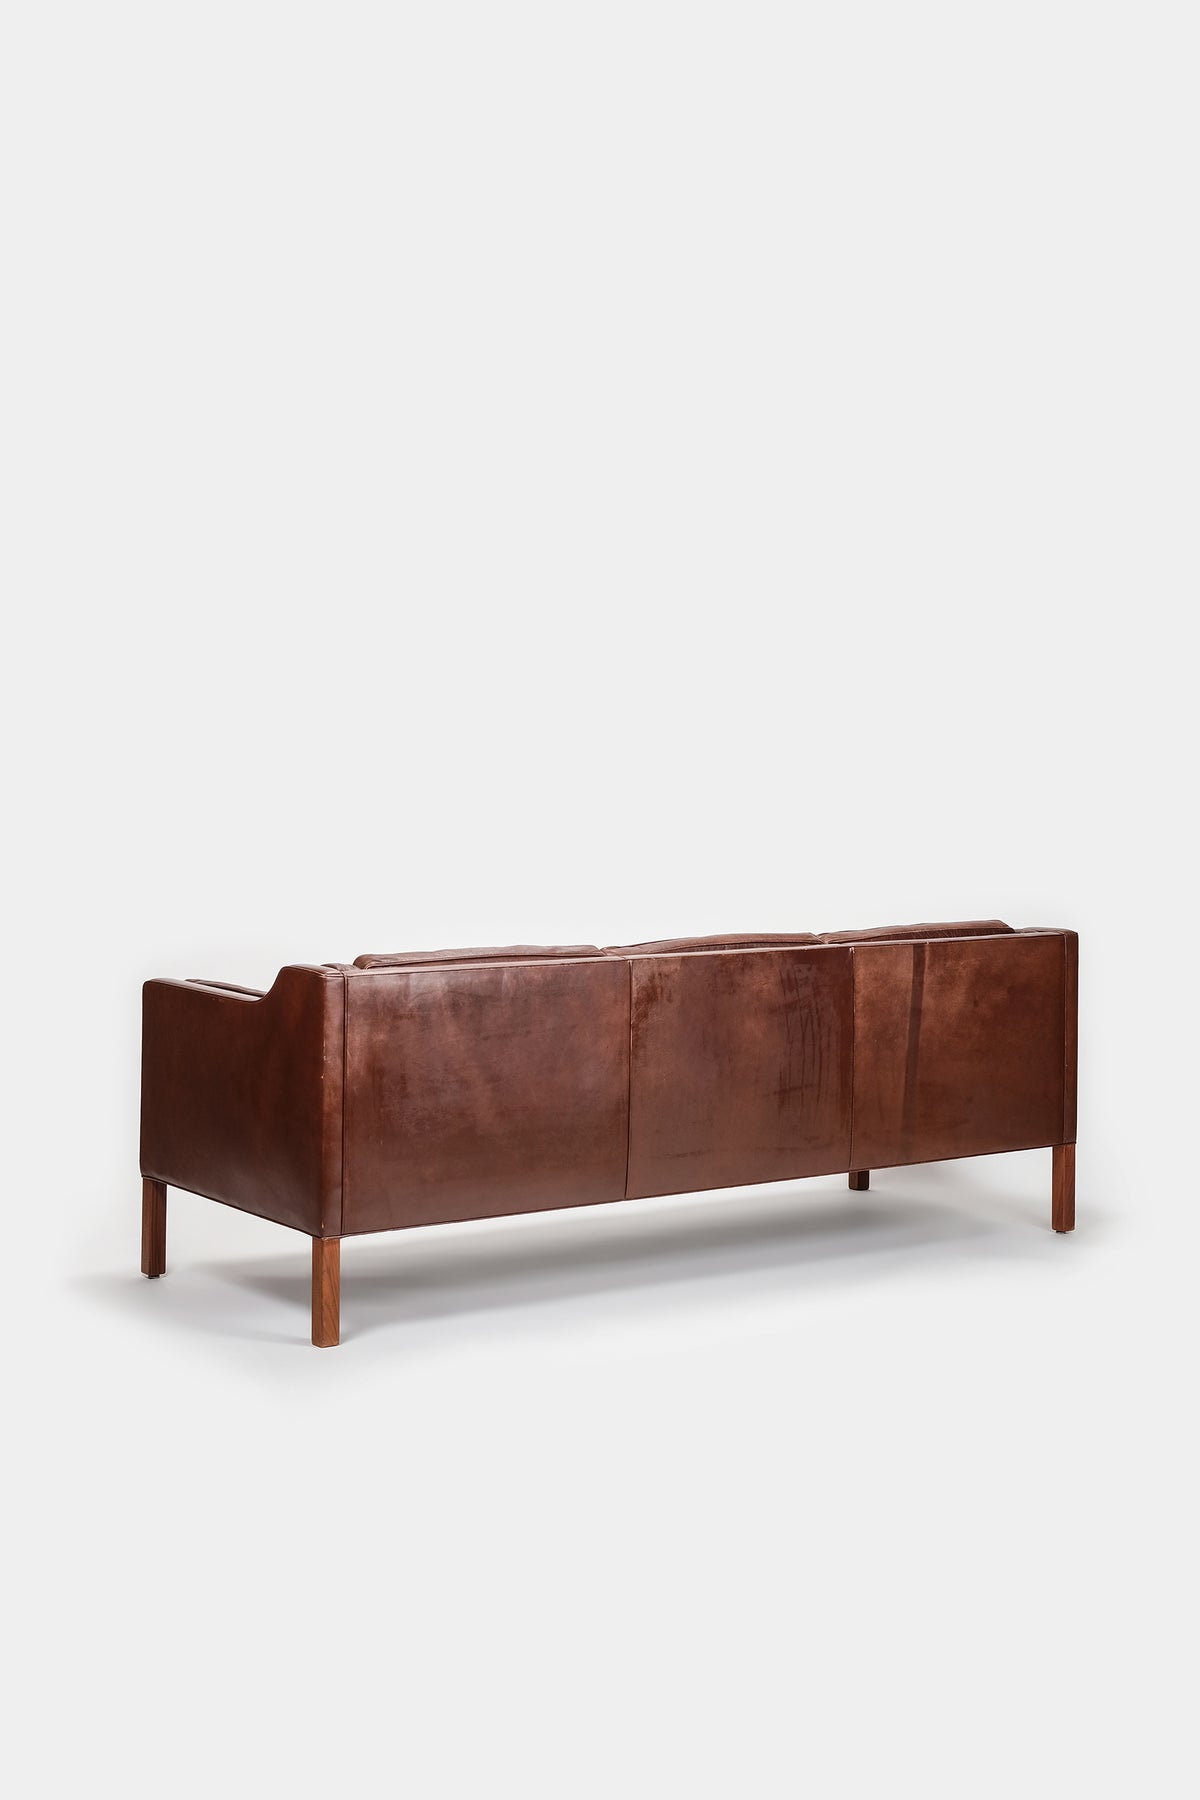 Børge Mogensen Sofa 2213, Fredericia Furniture, 60er